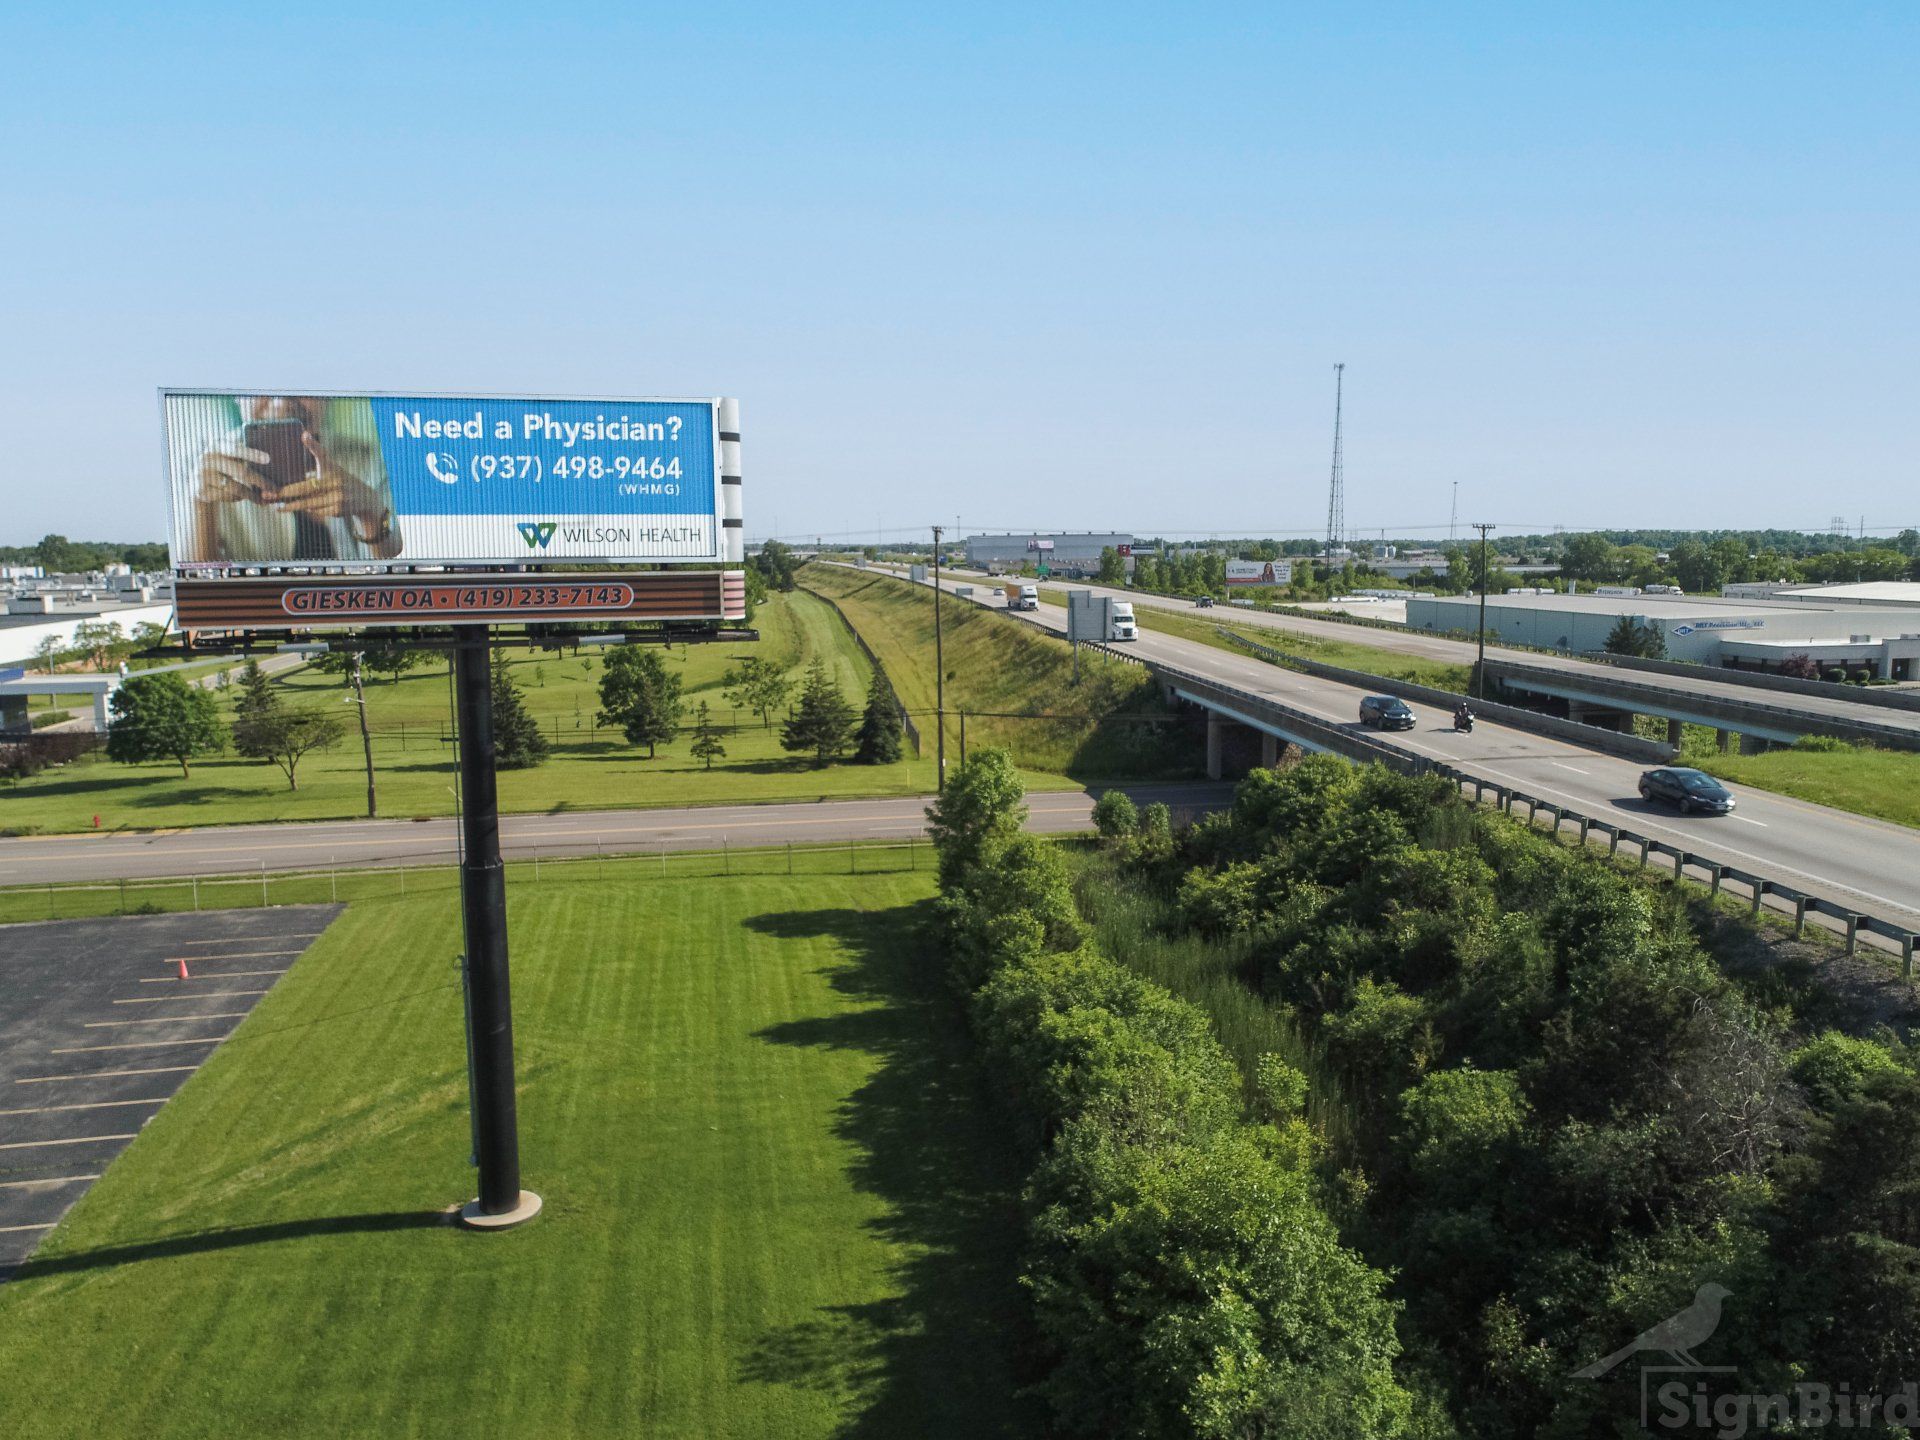 Bluffton, Ohio billboards